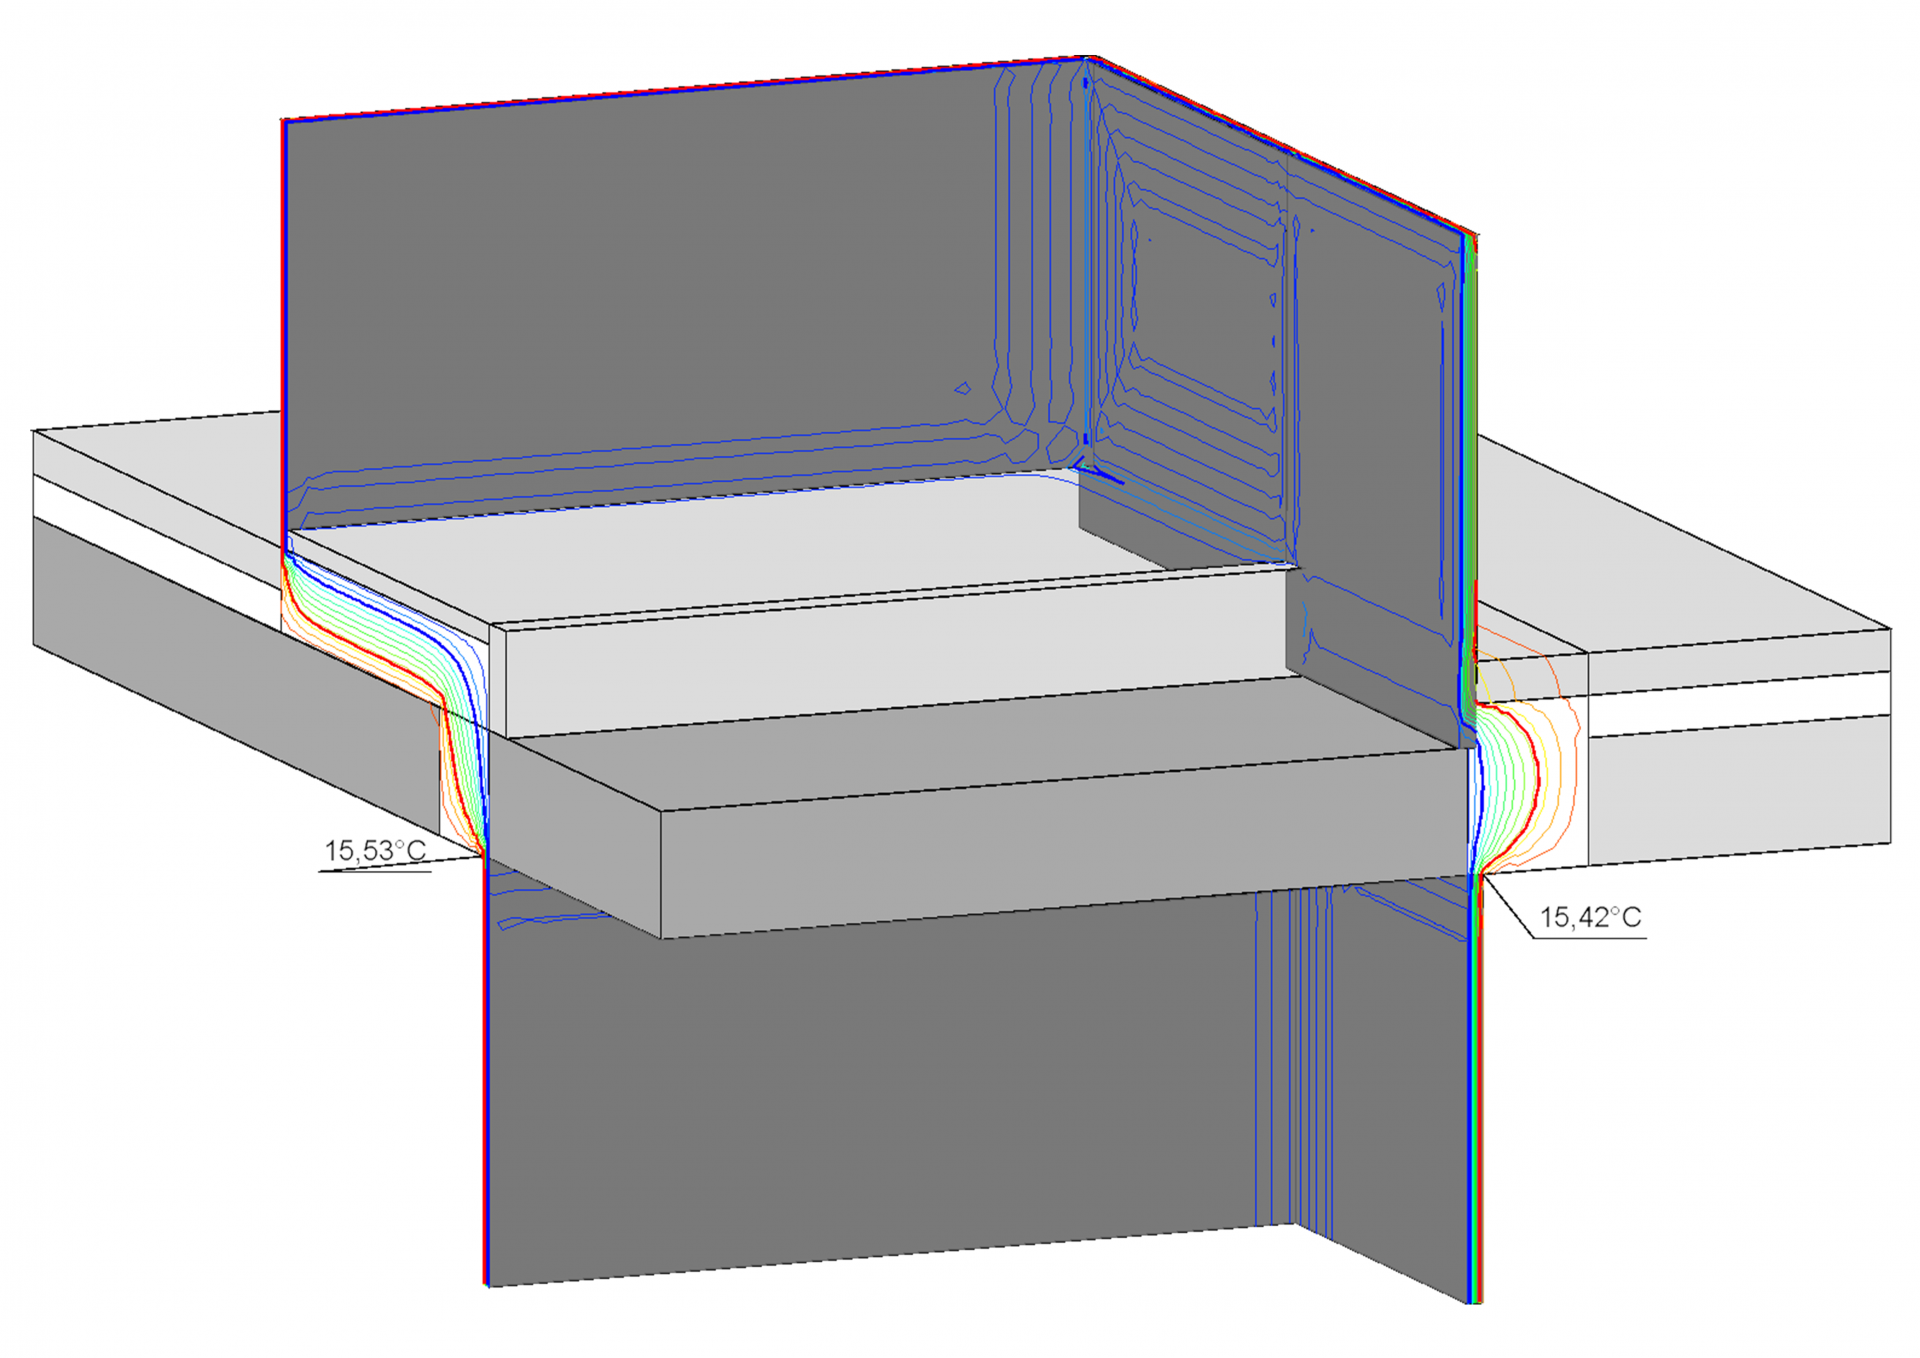 Abbildung einer berechneten 3D-Wärmebrücke (Abb.: Andreas Mack)